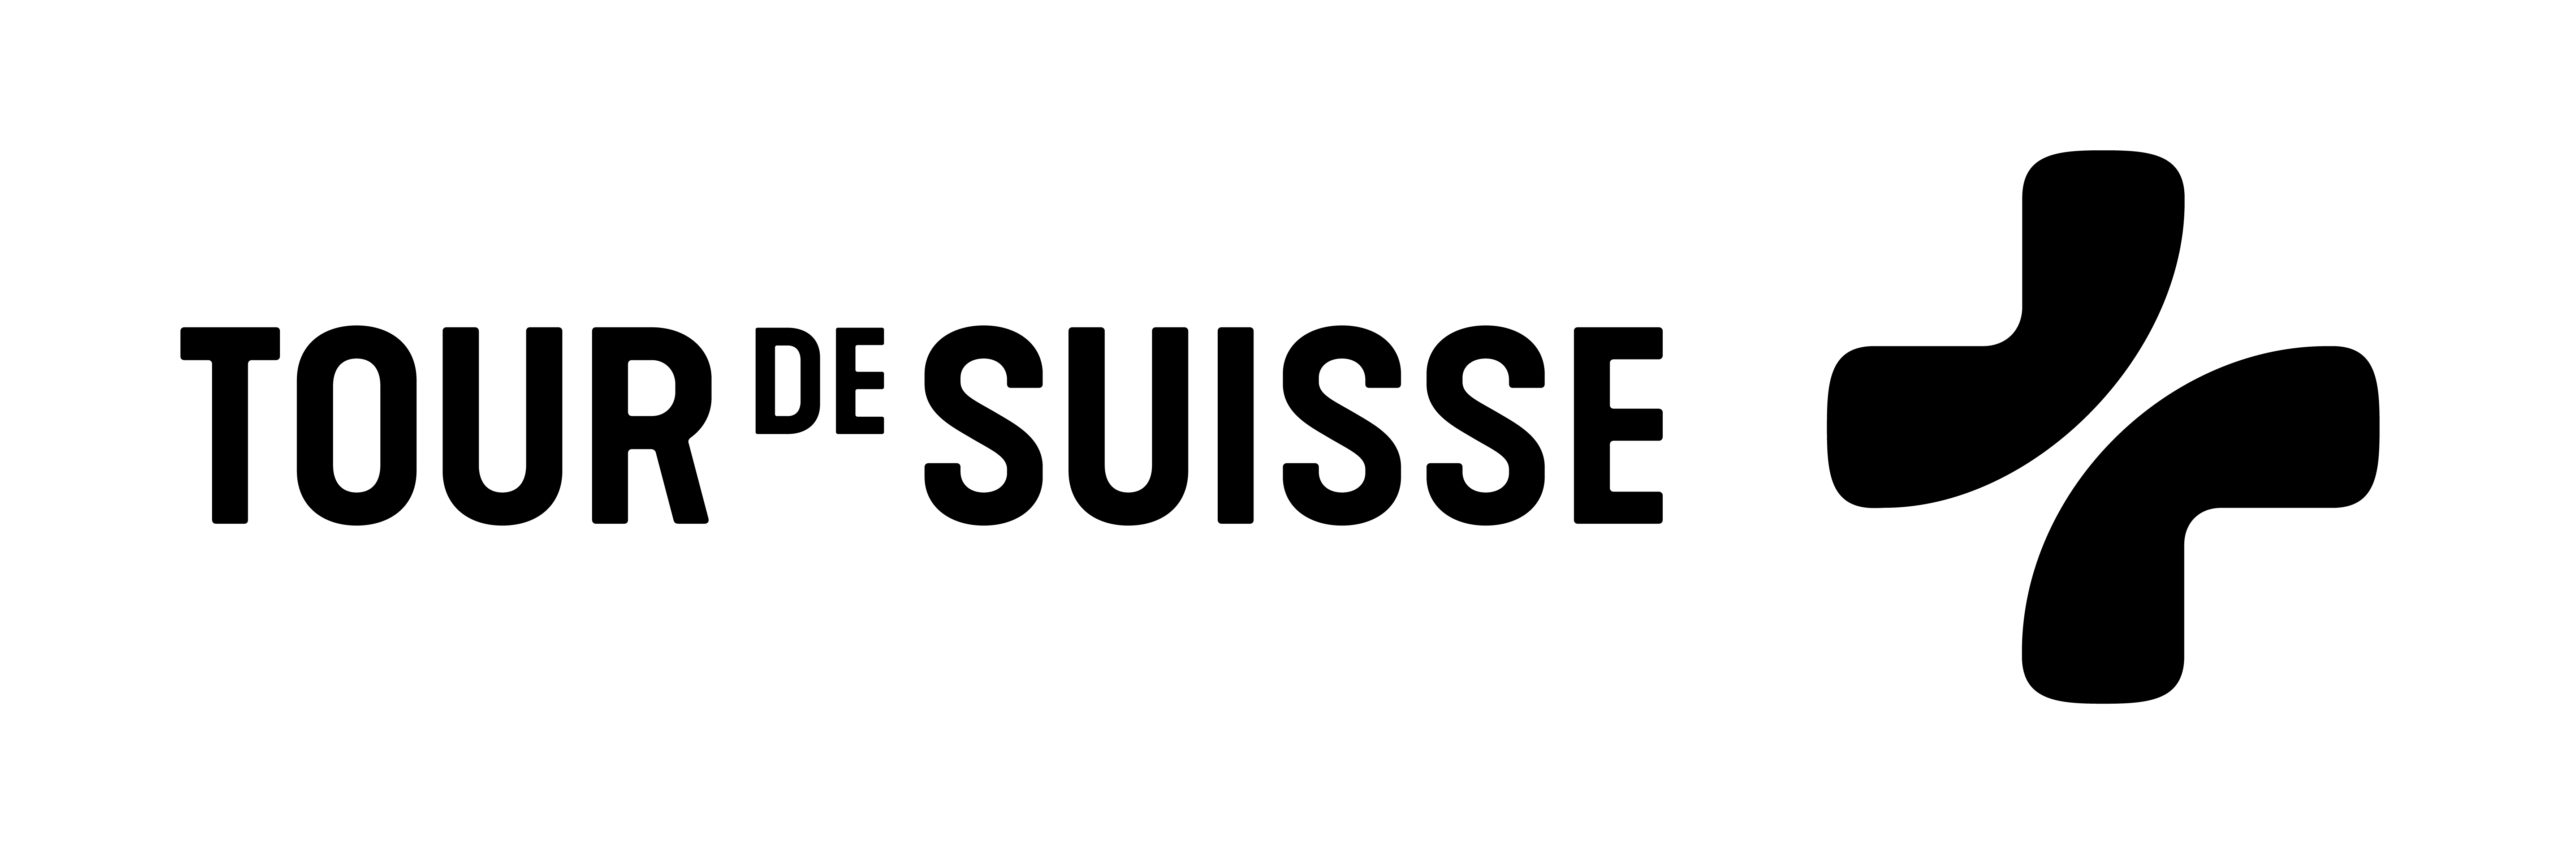 TOUR-DE-SUISSE-LogotypeBildmarke-quer-schwarz-sRGB300ppi-scaledjpg